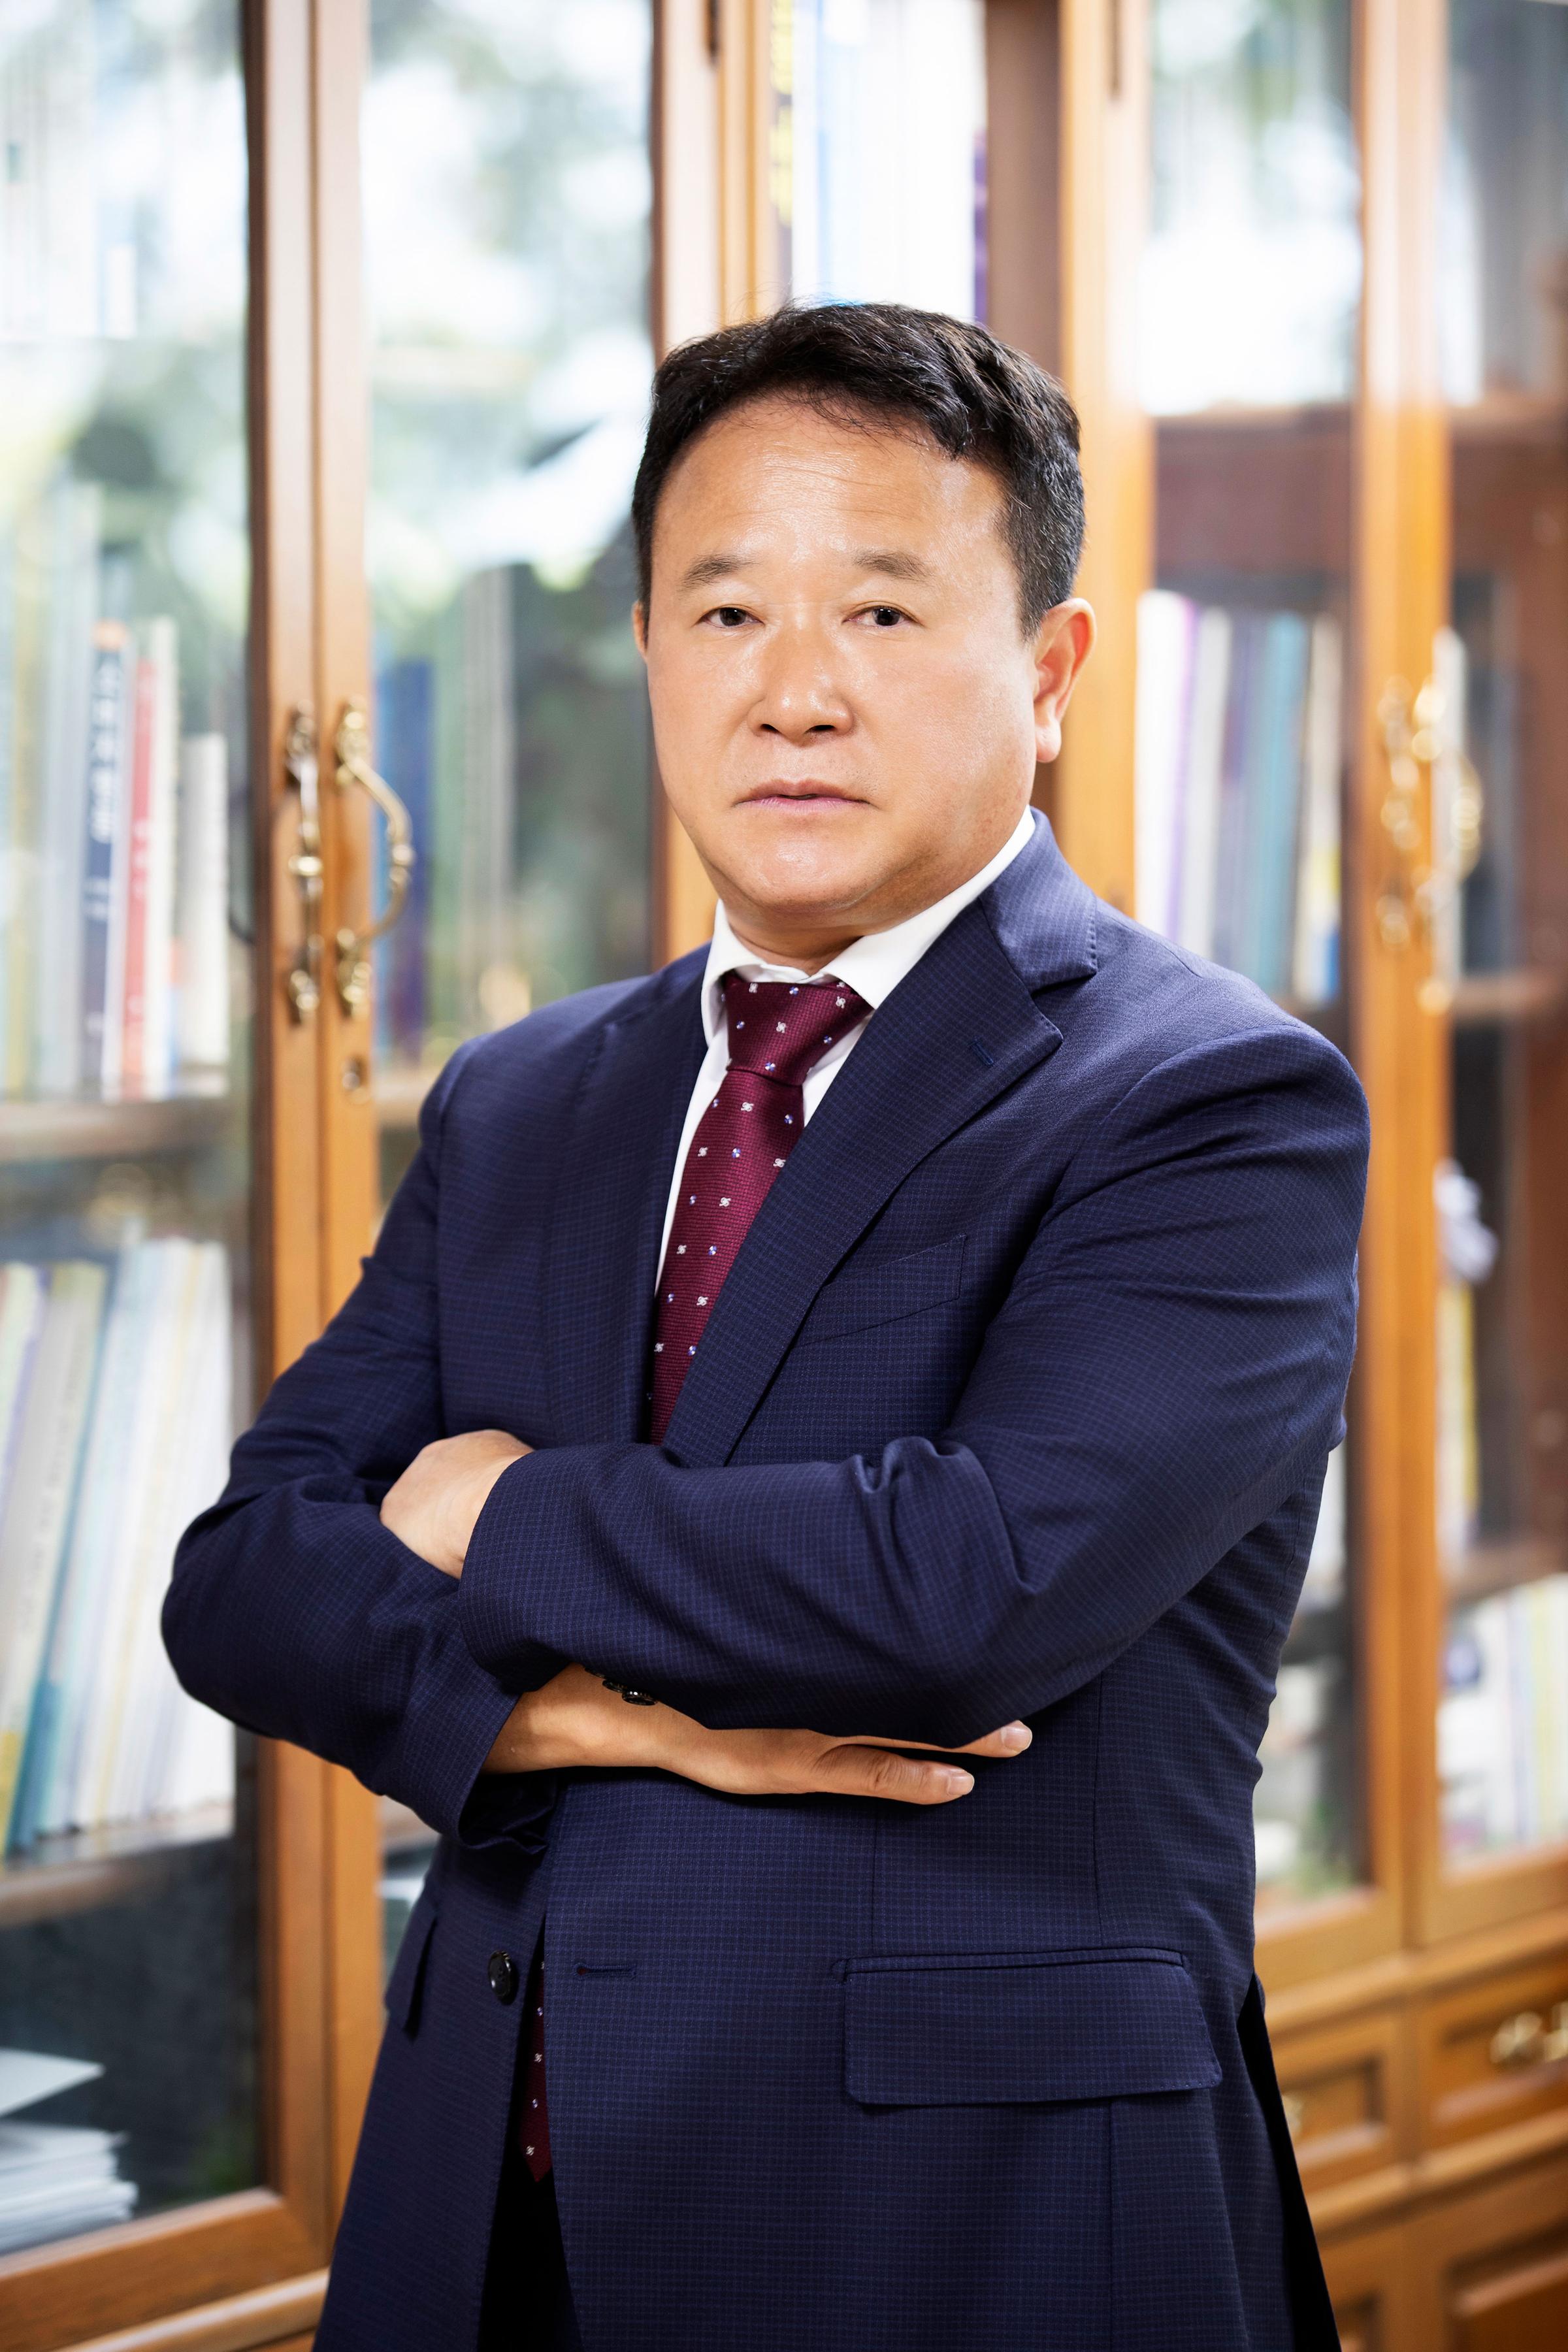 Soong Eui Women’s University President Park Gyeong-ho